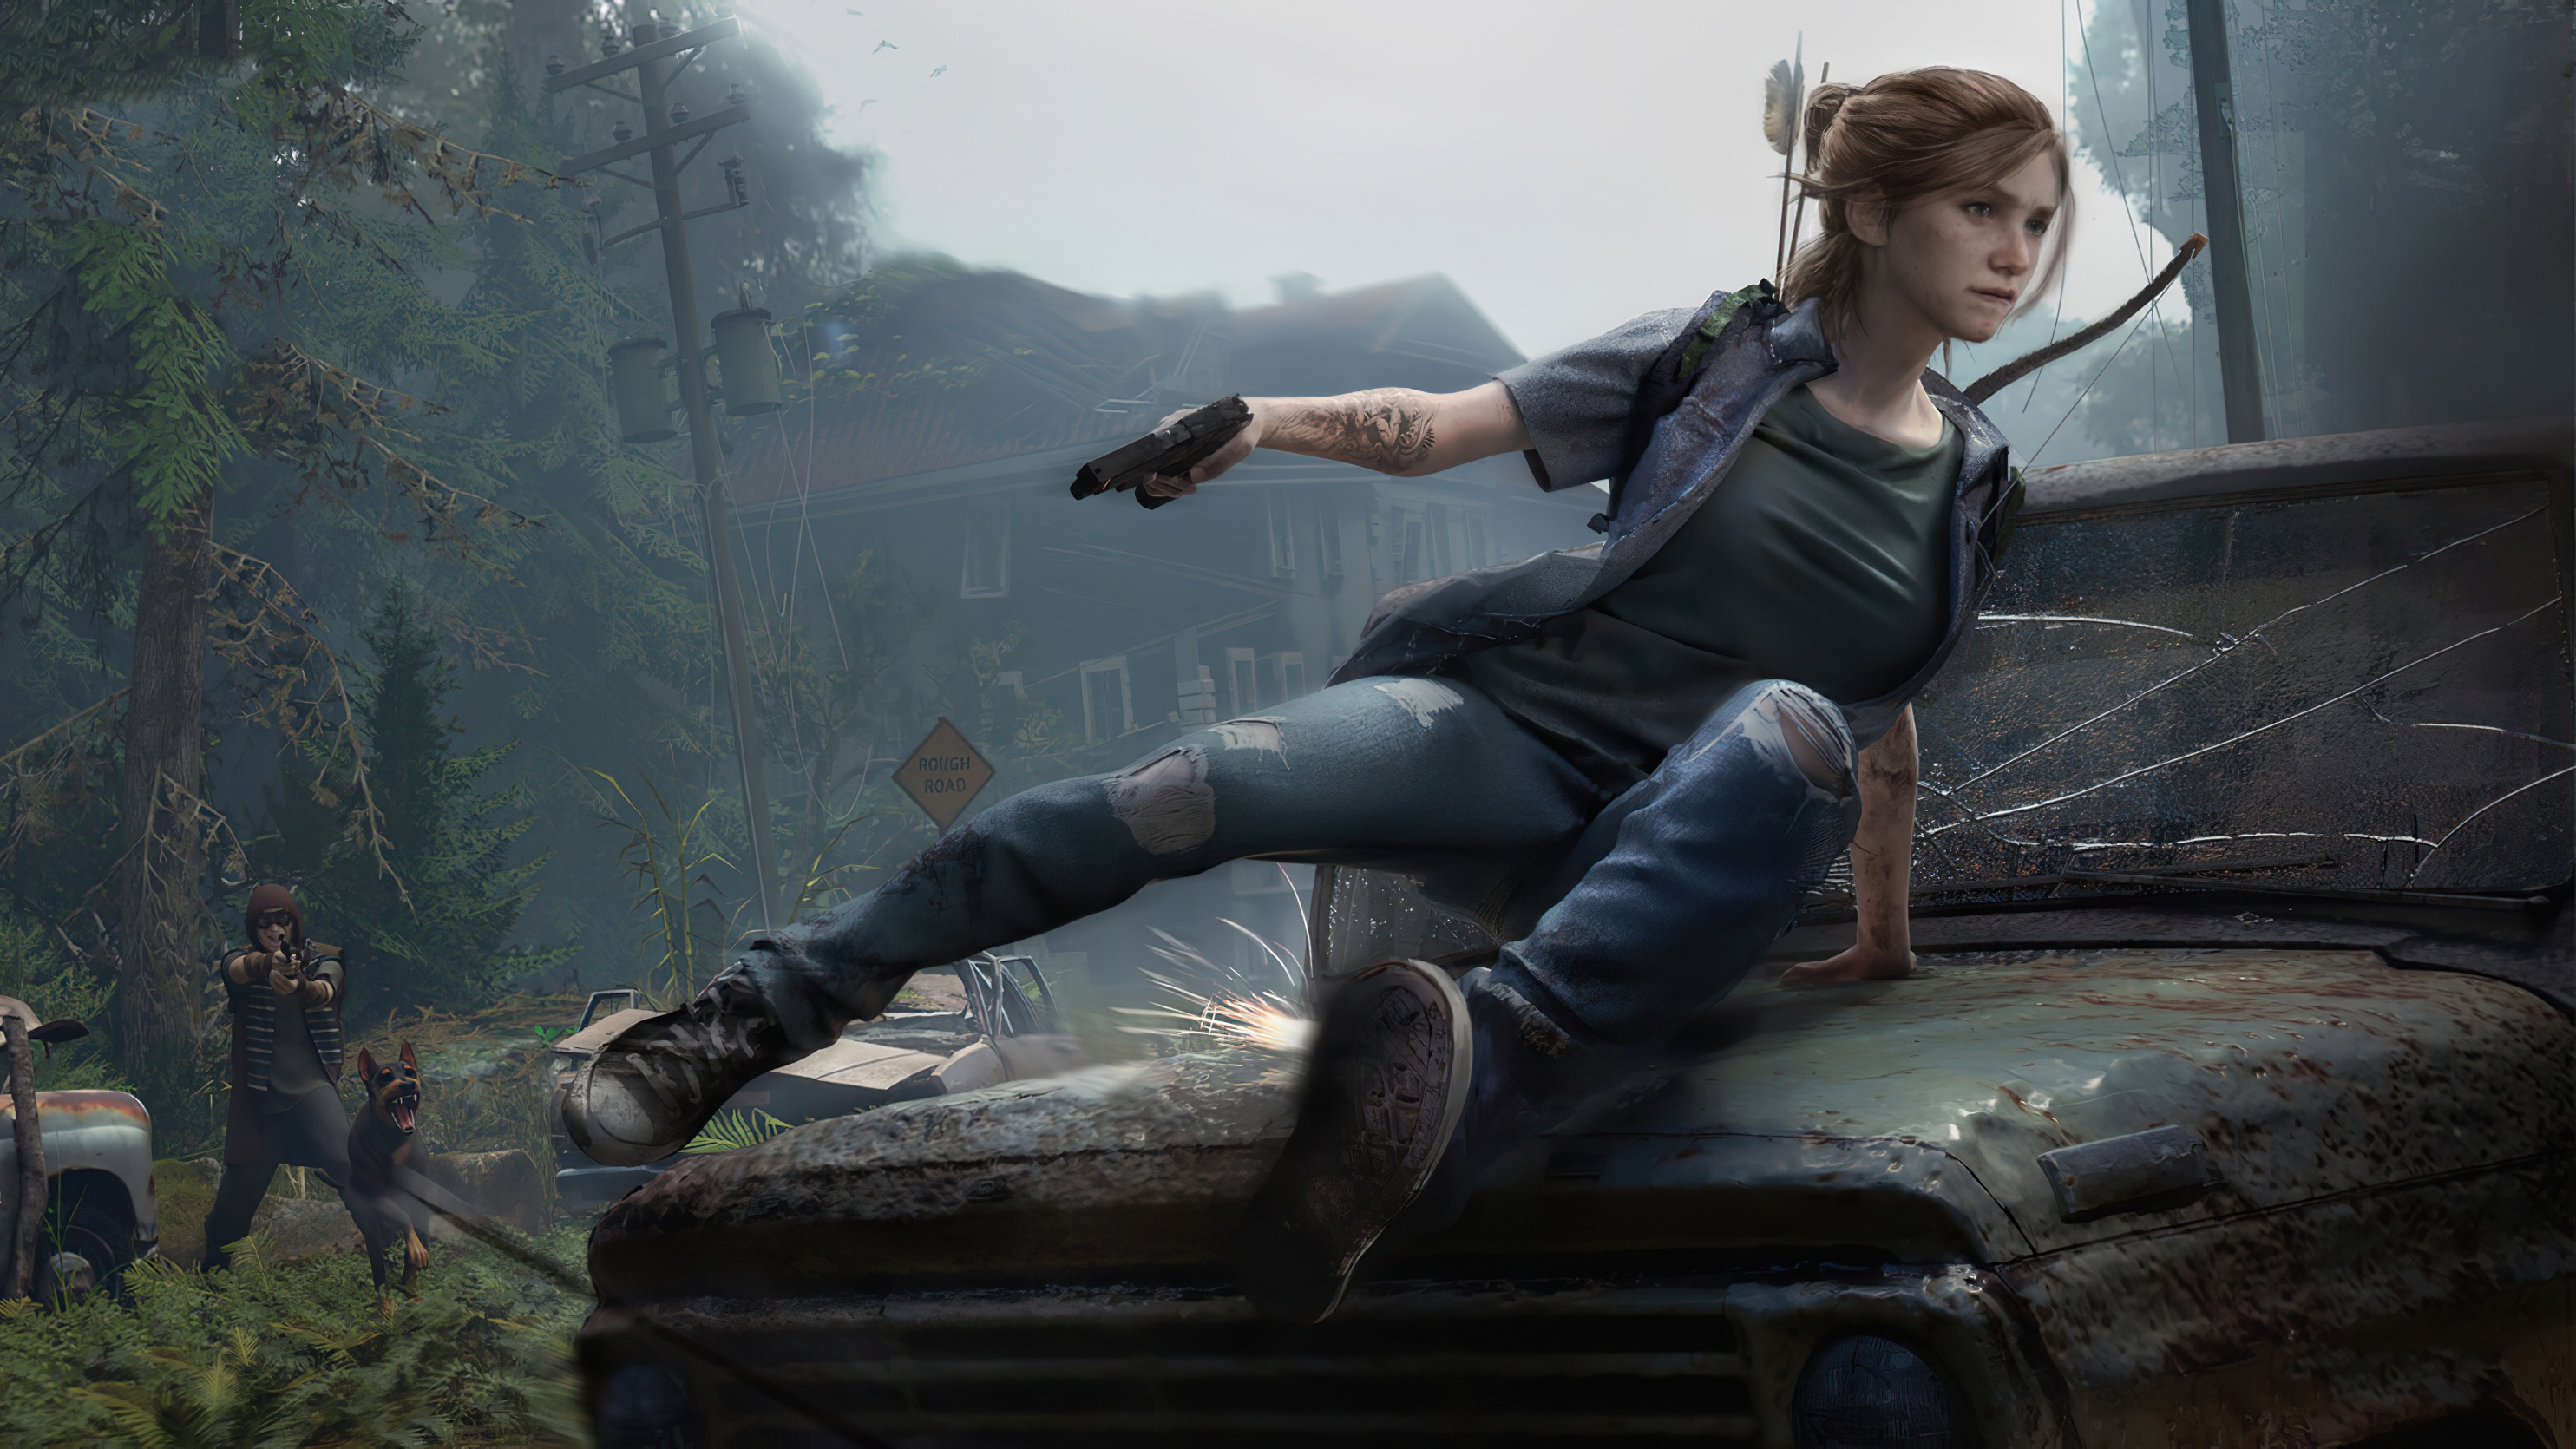 Fondos de pantalla Ellie de The Last of Us